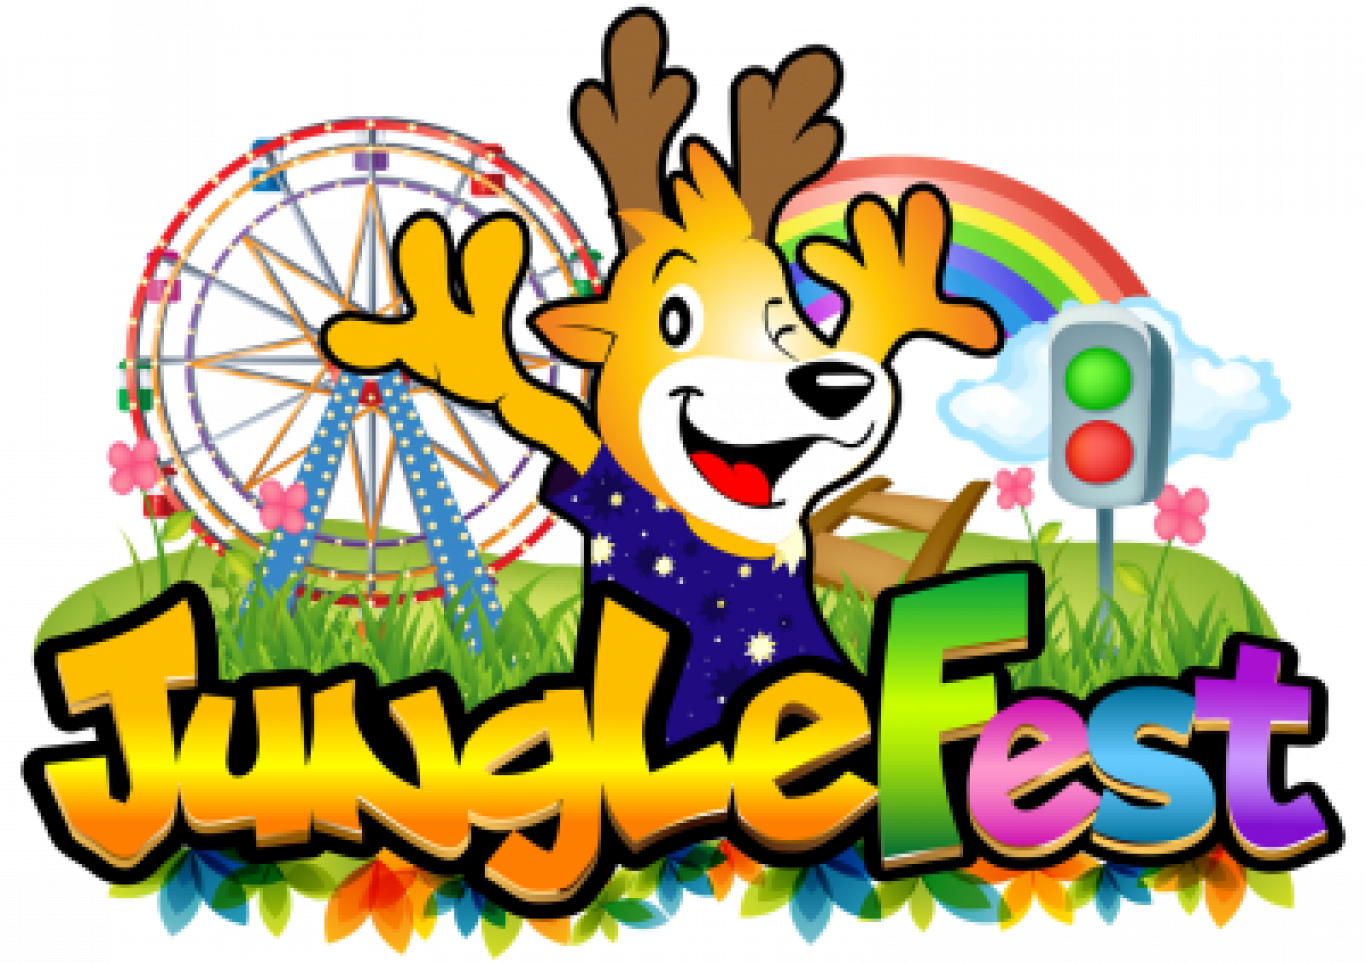 Jungle Fest